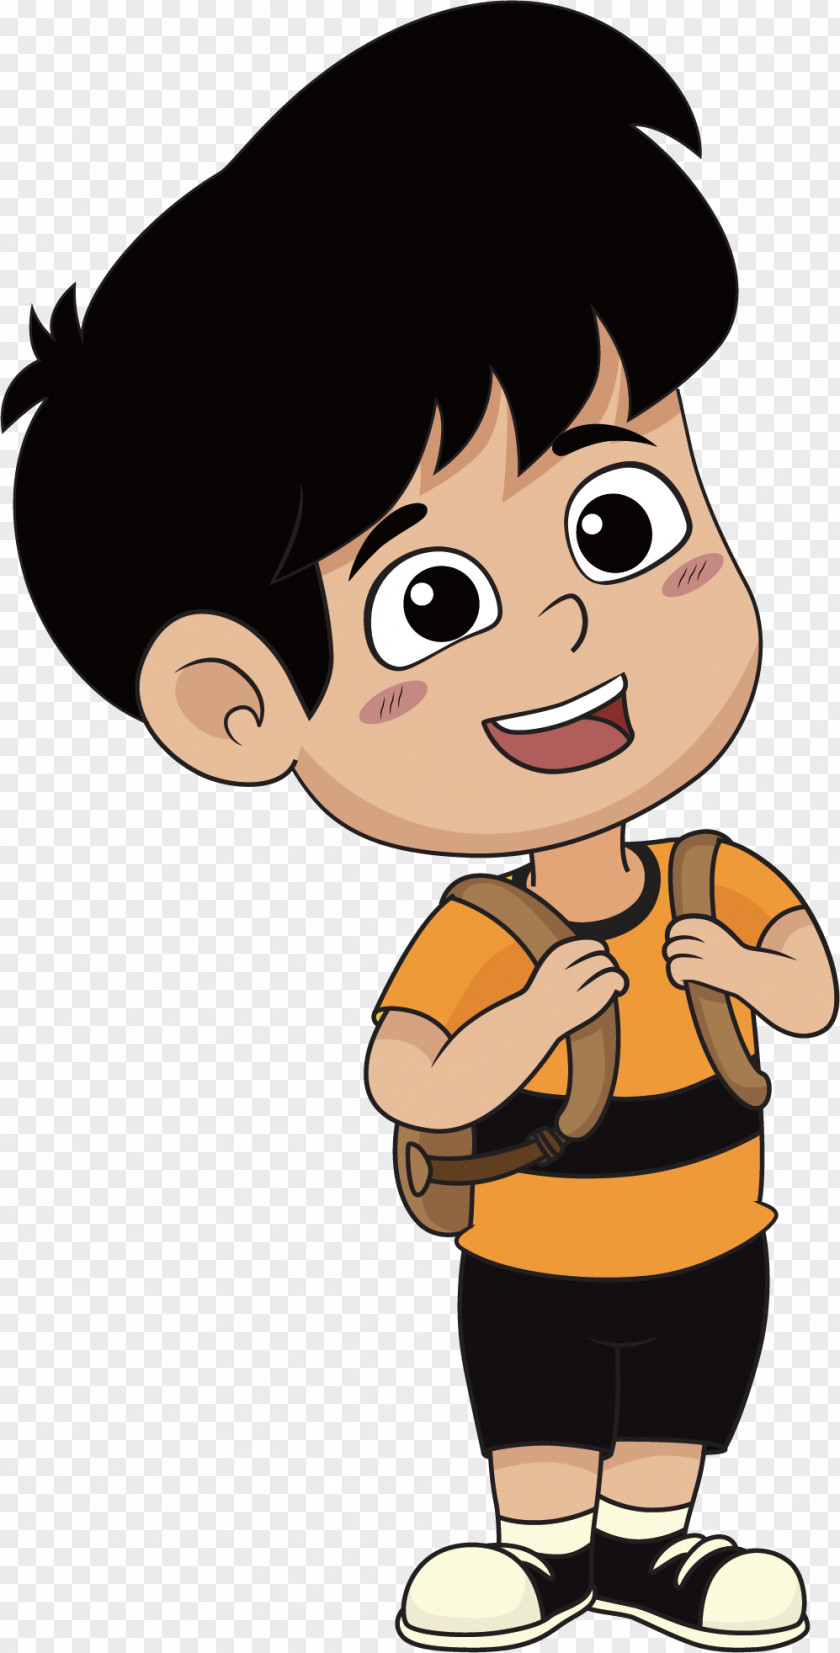 Cartoon Kids Royalty-free Illustration PNG